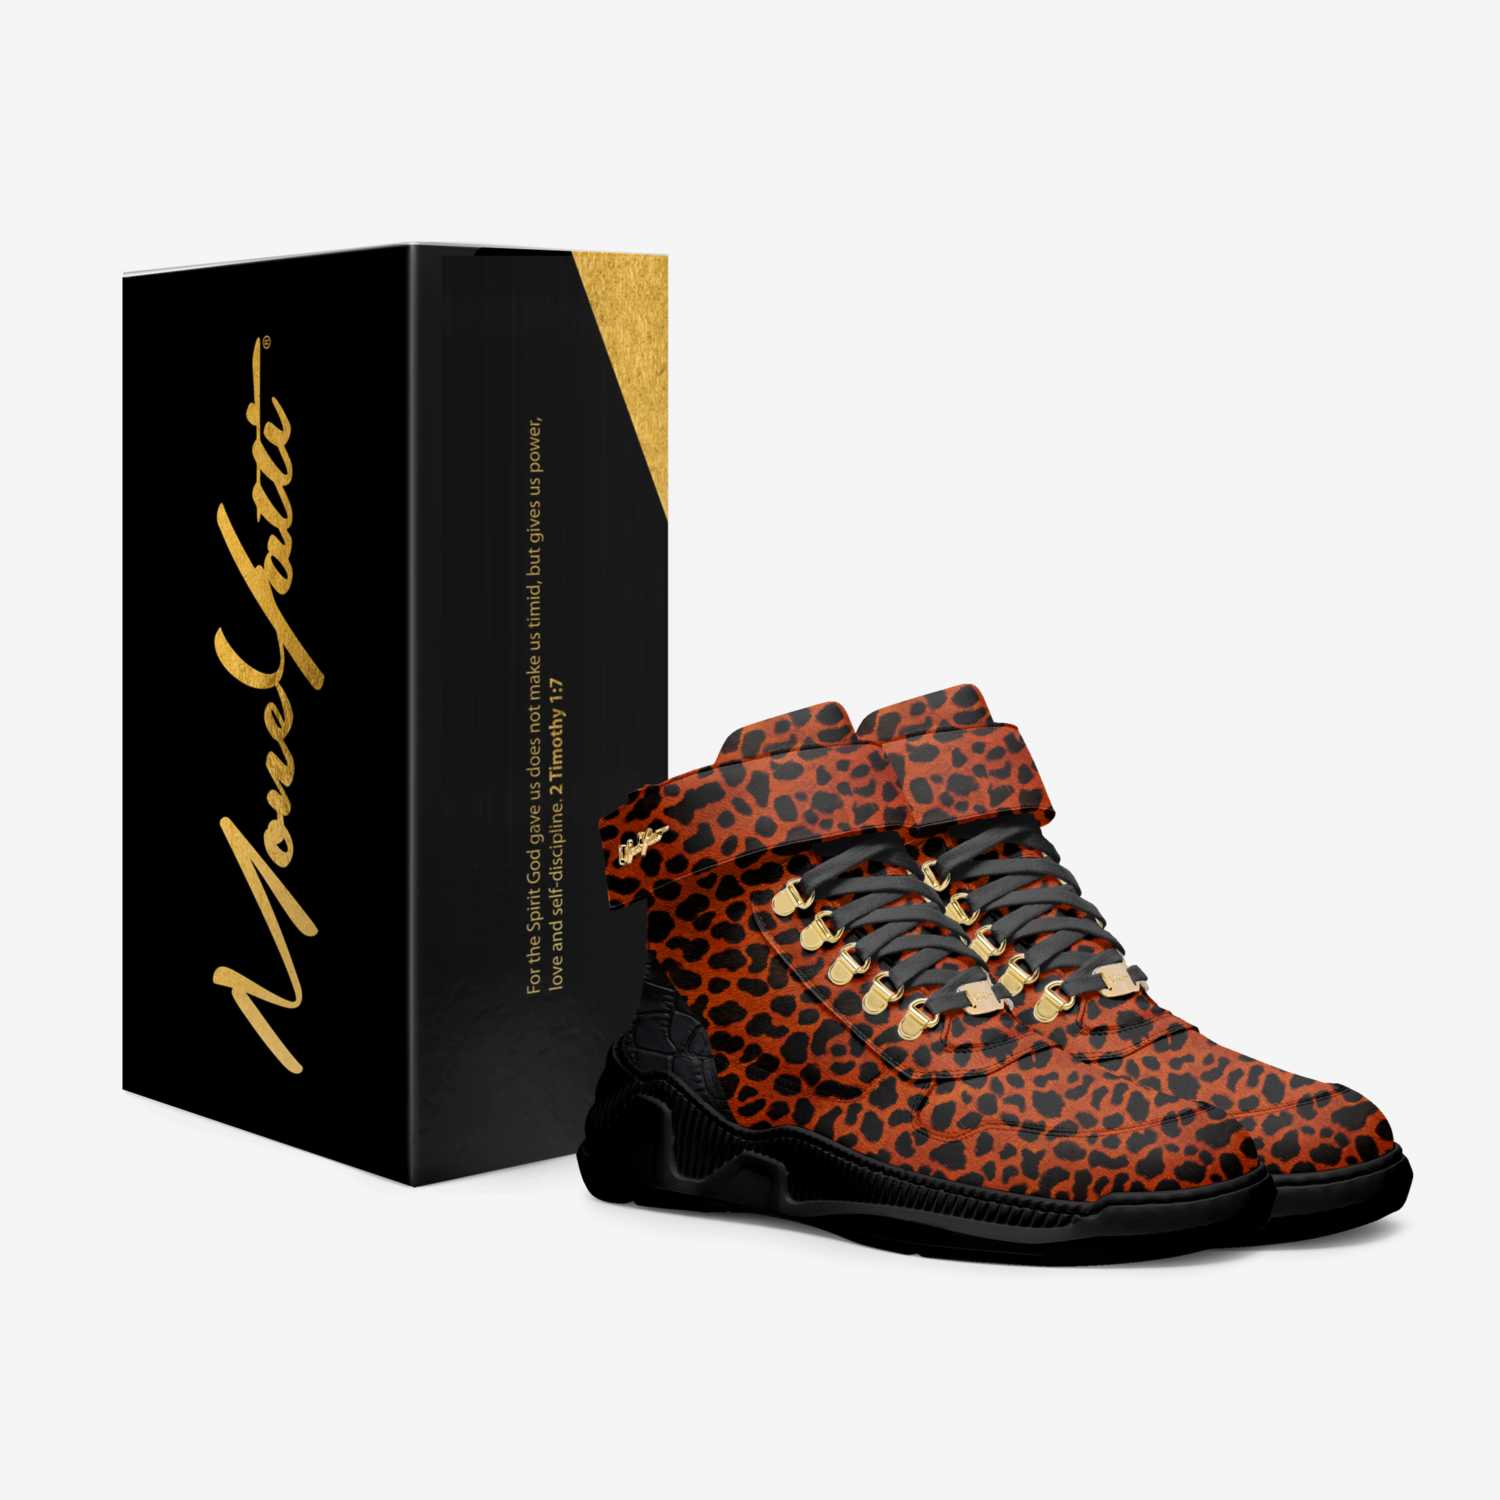 Moneyatti Traps11 custom made in Italy shoes by Moneyatti Brand | Box view